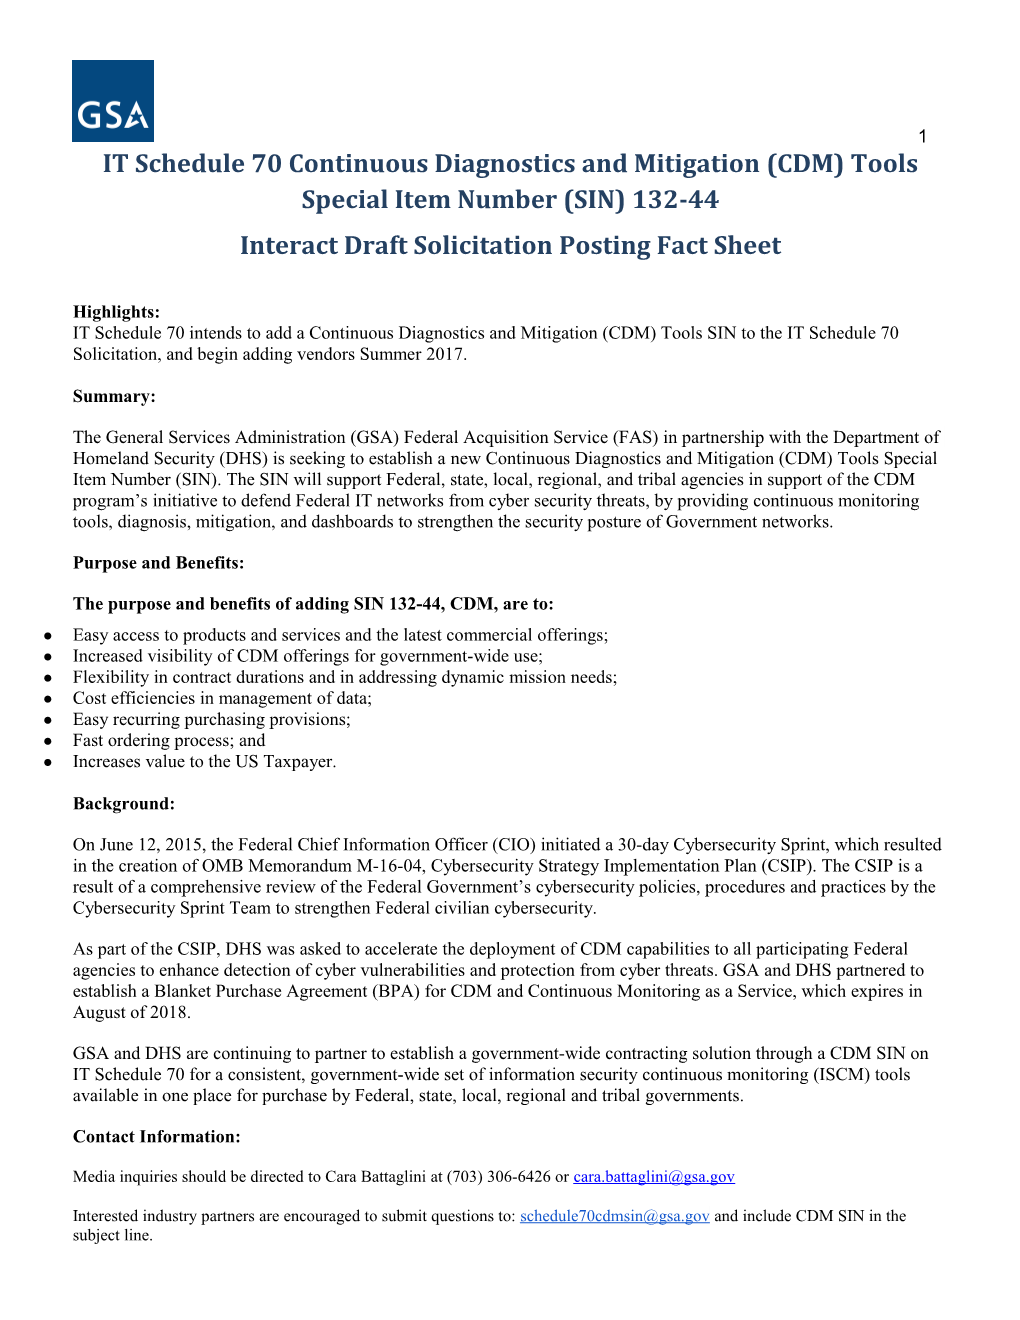 IT Schedule 70 Continuous Diagnostics and Mitigation (CDM) Tools Special Item Number (SIN)